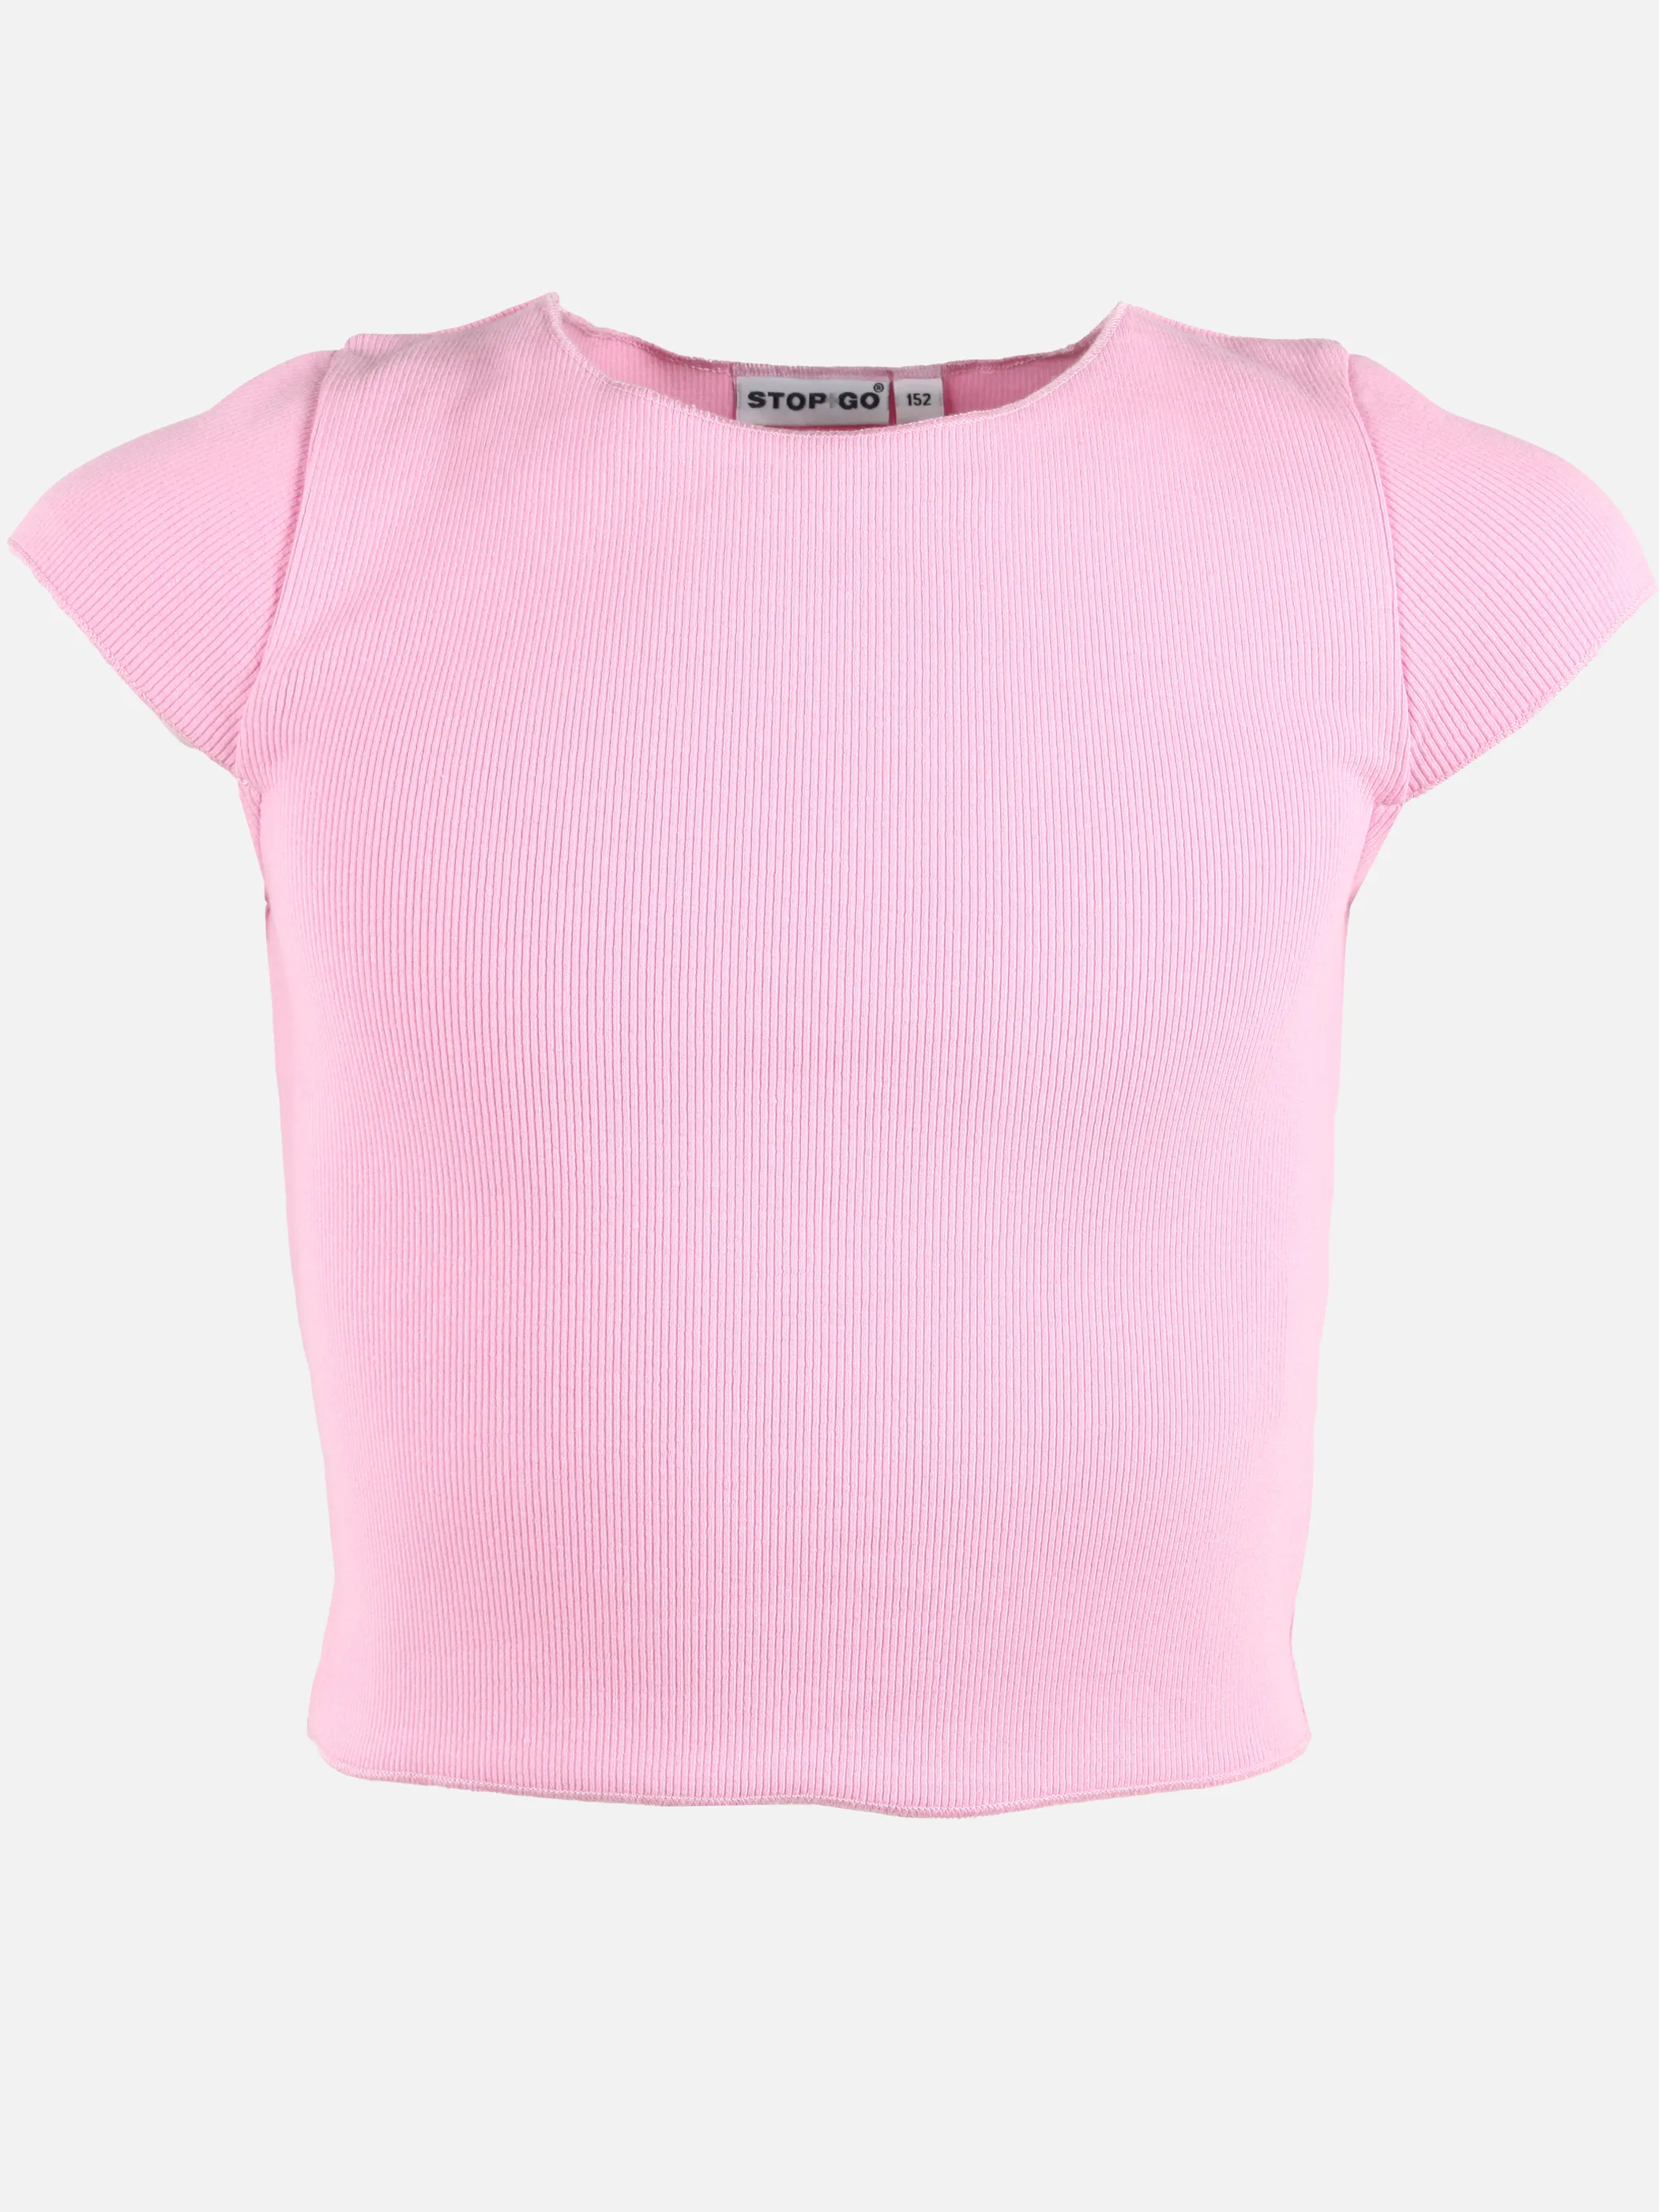 Stop + Go JM geripptes rundhals T-Shirt Pink 890971 PINK 1